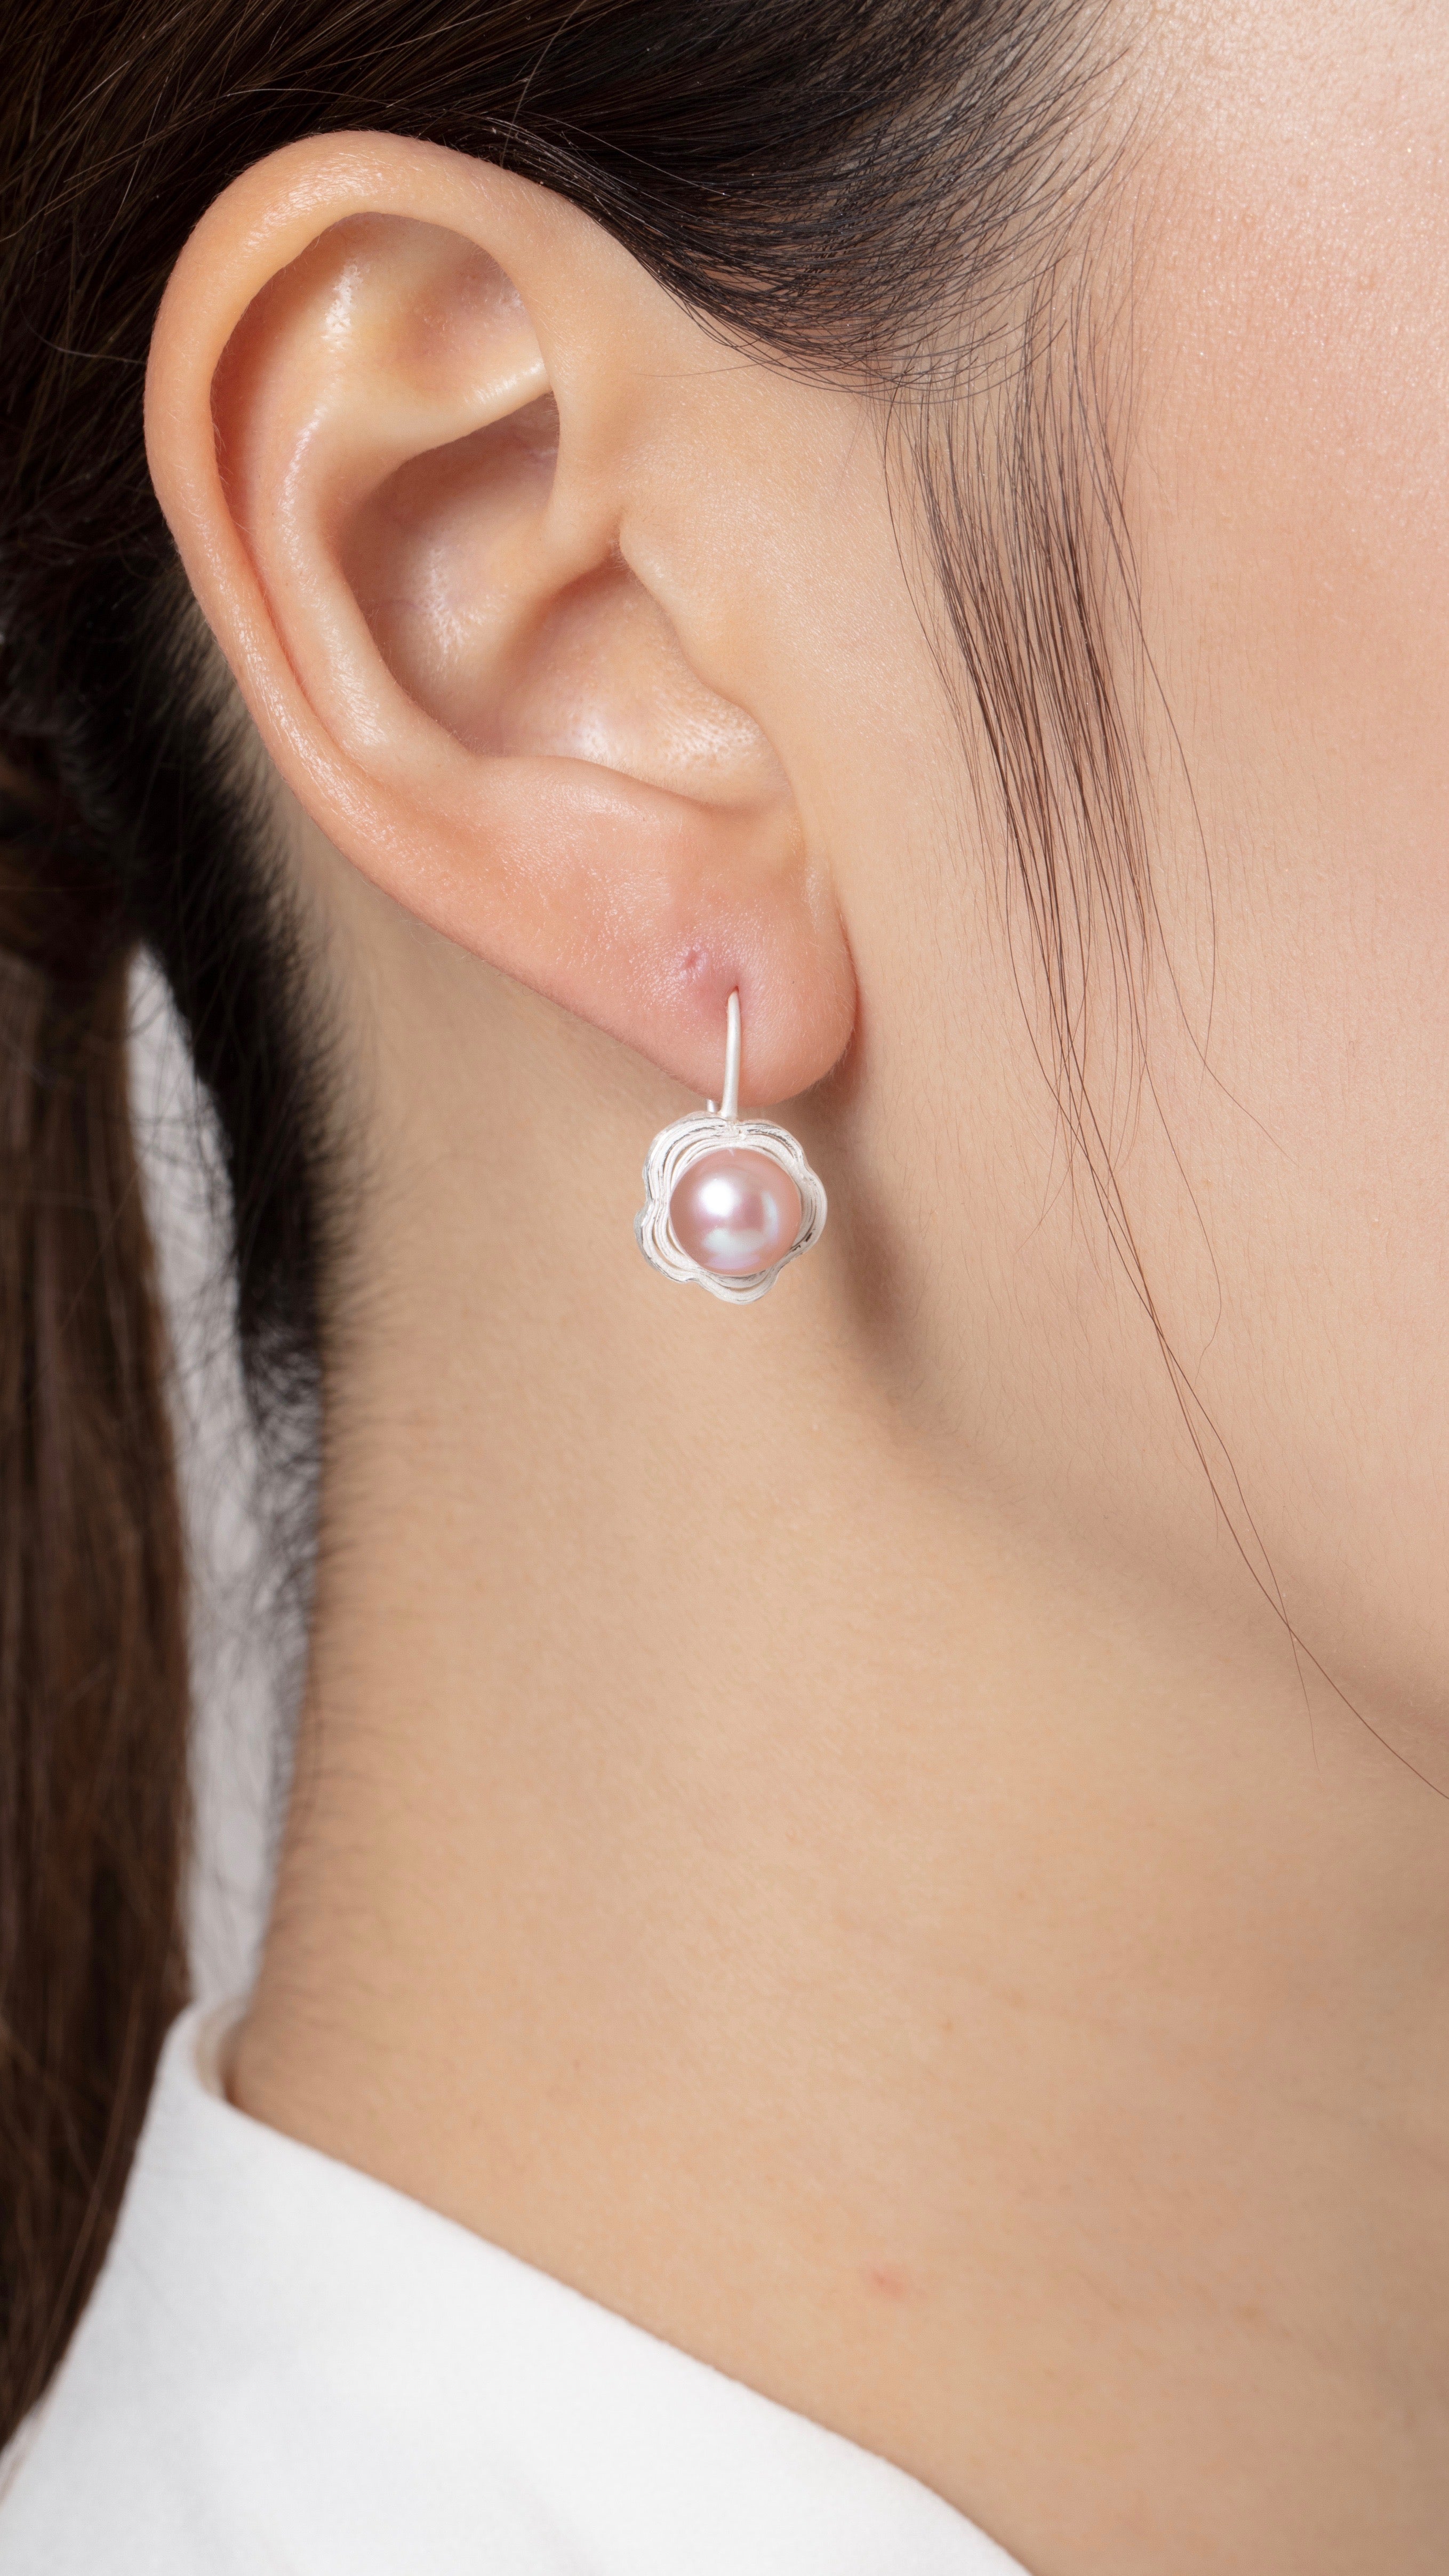 Mousse-rosas Earrings